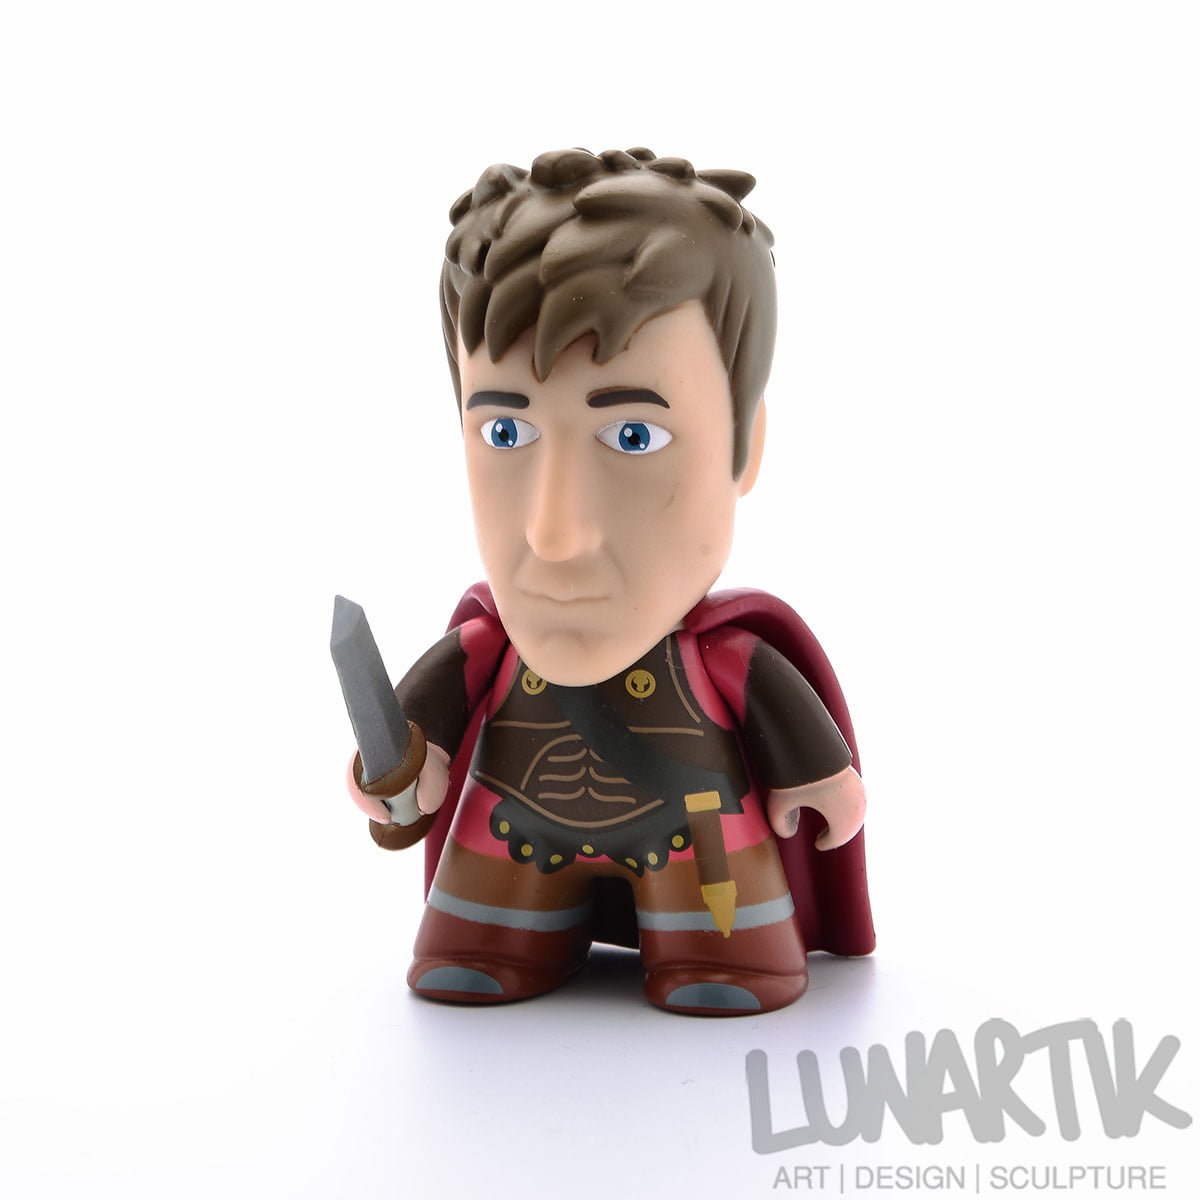 Doctor Who Titans Figure by Matt Jones aka Lunartik